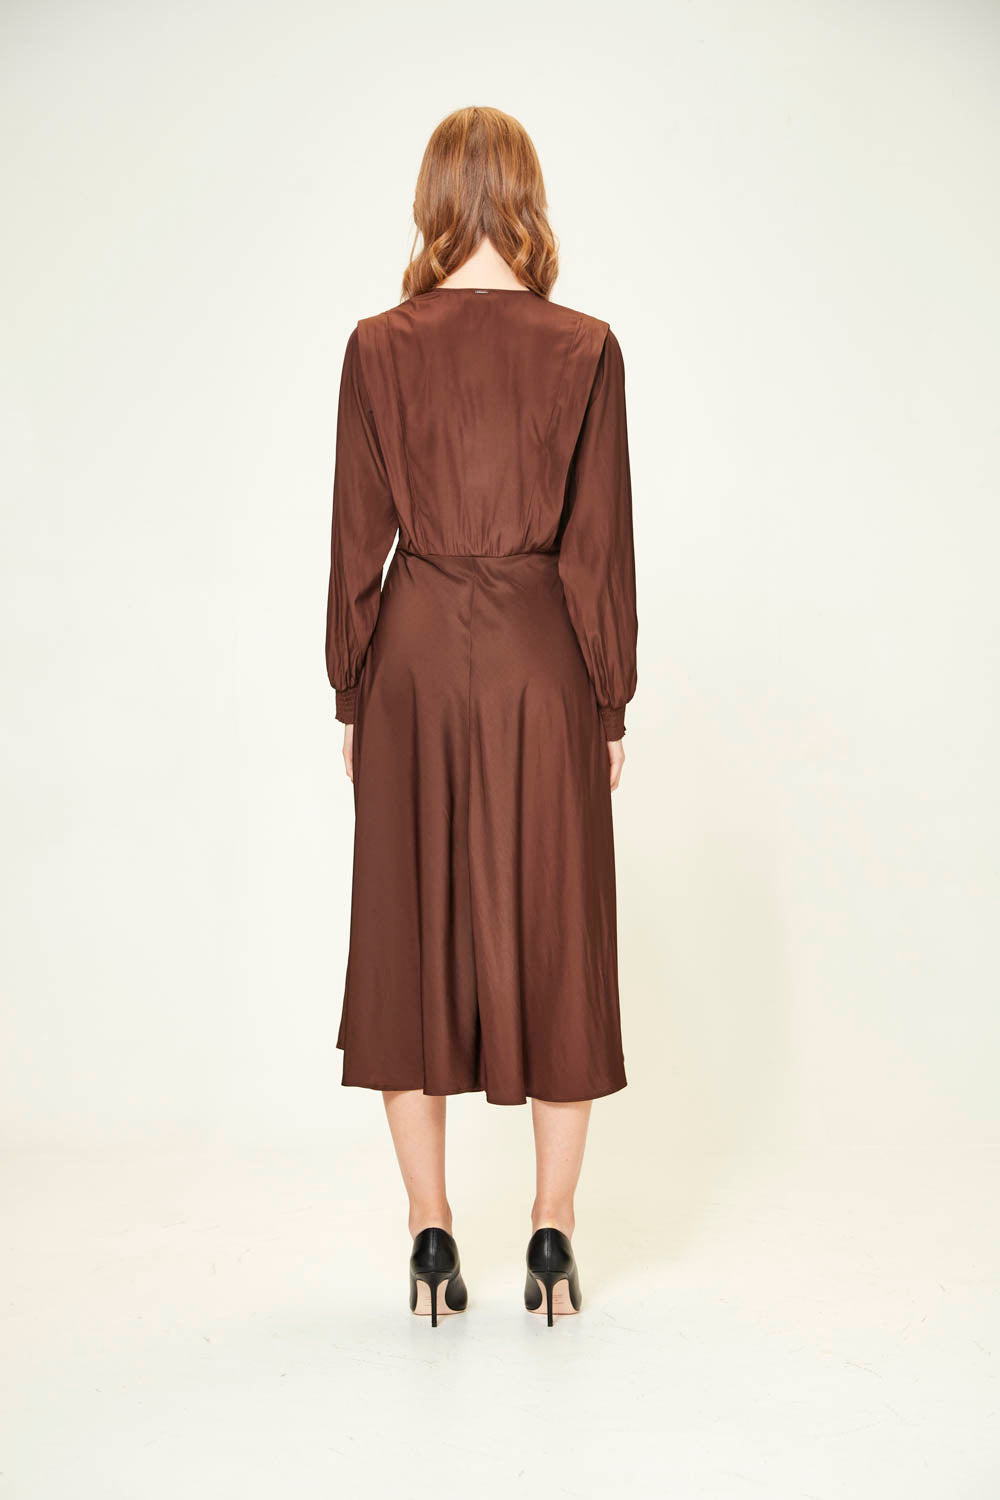 Glide by Verge - Rania Dress - Chocolate - Dress VERGE